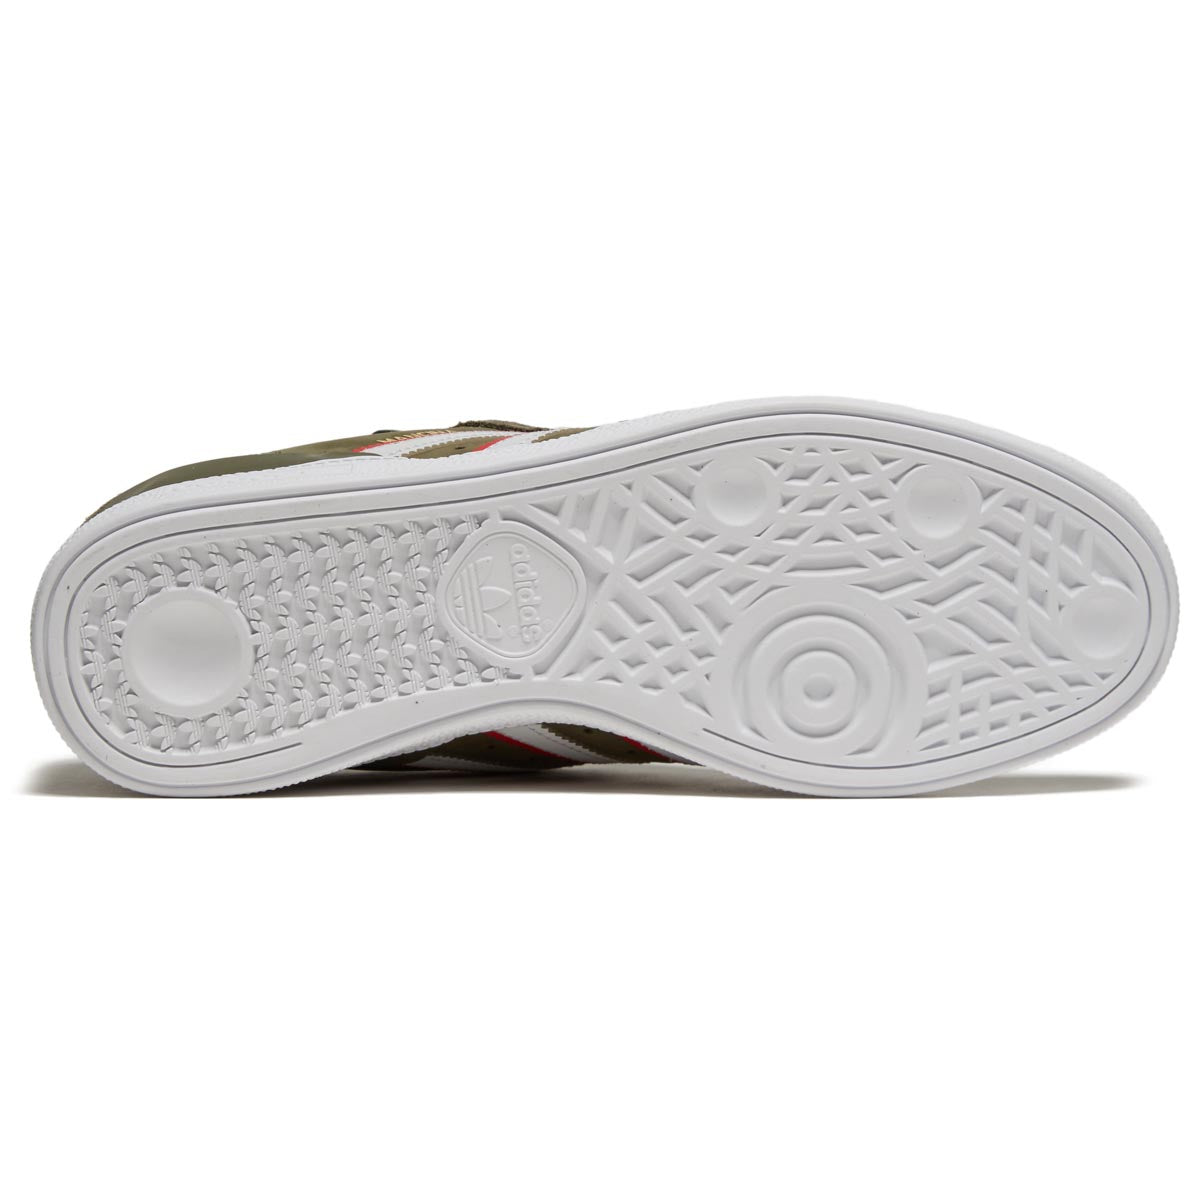 Adidas Busenitz x Dan Mancina Shoes - Olive Strata/Red/Ftwr White image 4